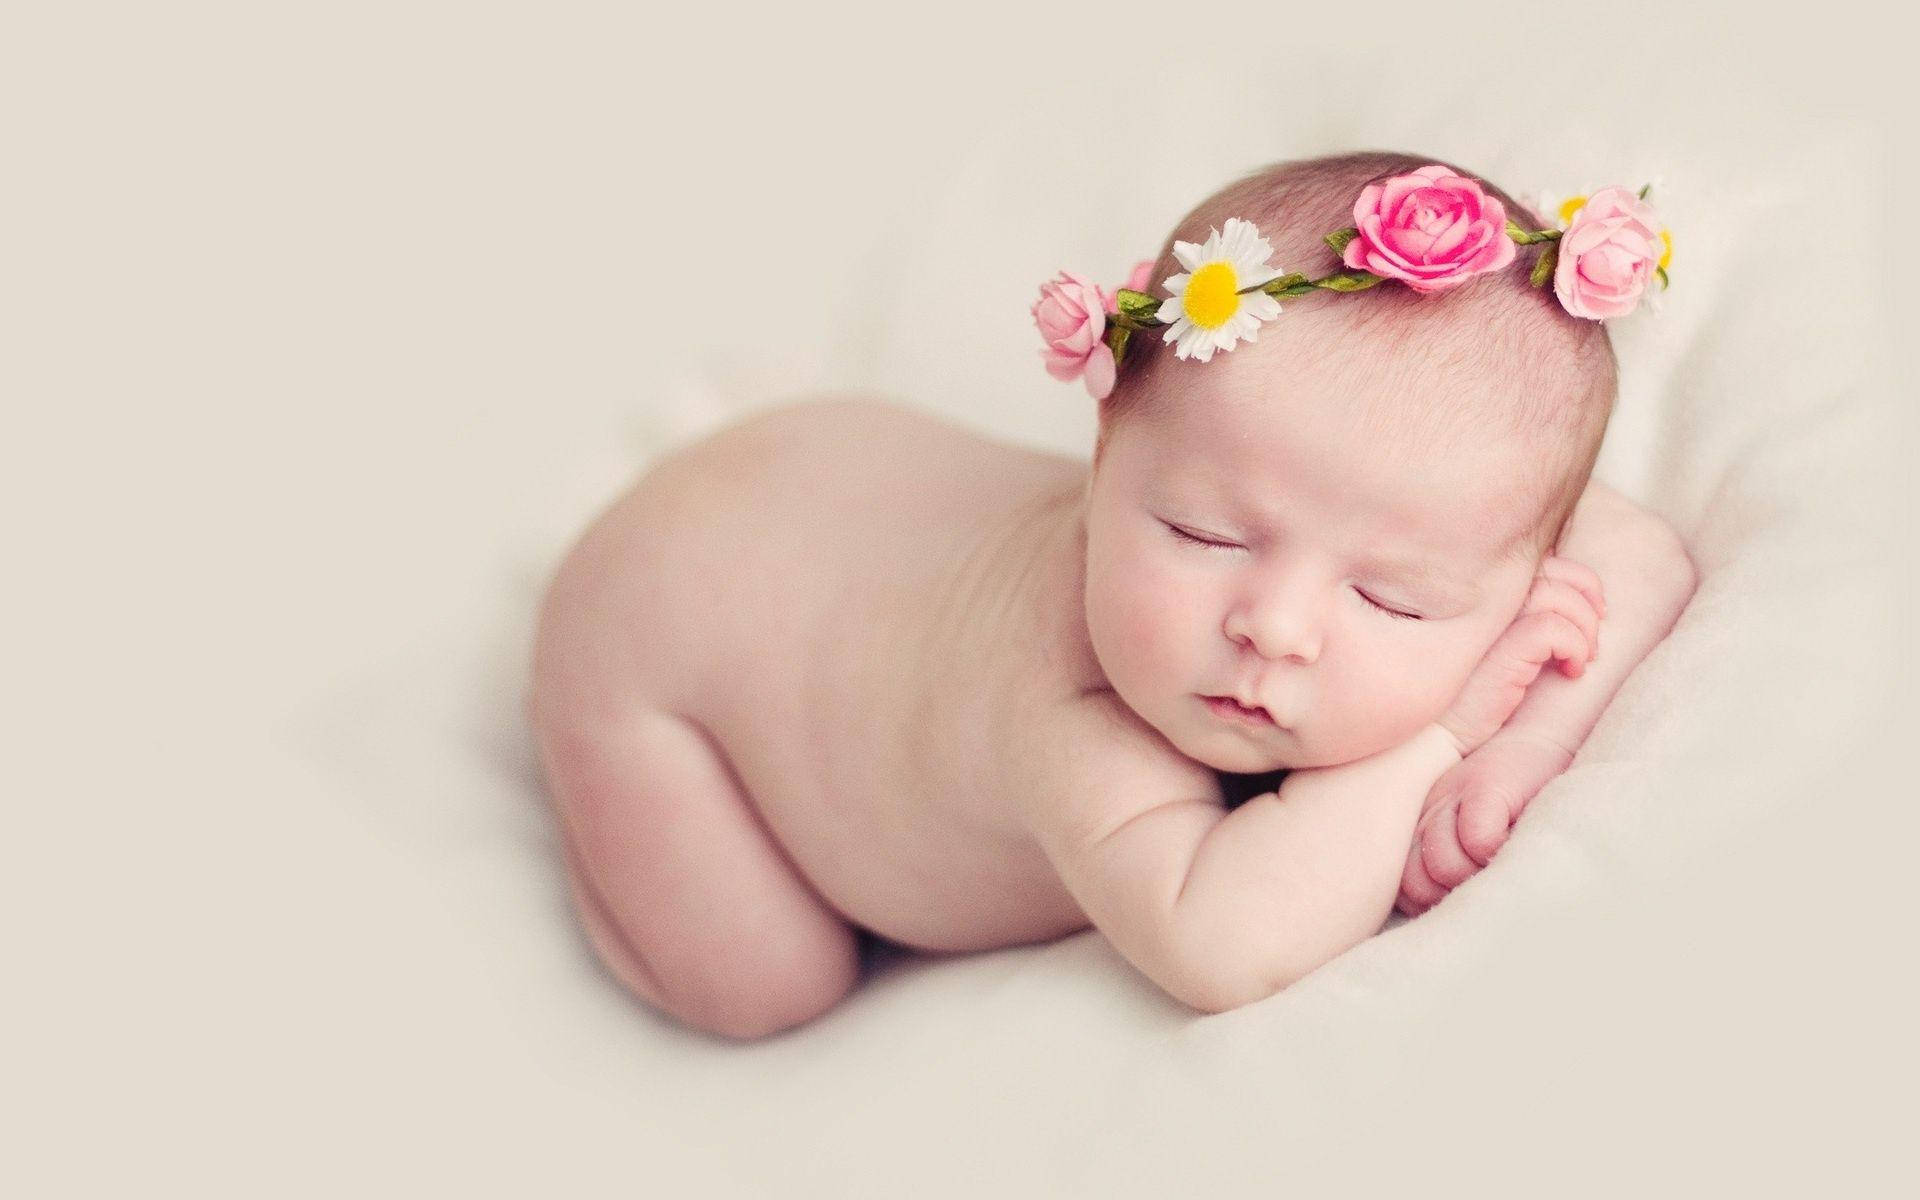 Innocence Personified: Sleeping Newborn Baby Wallpaper